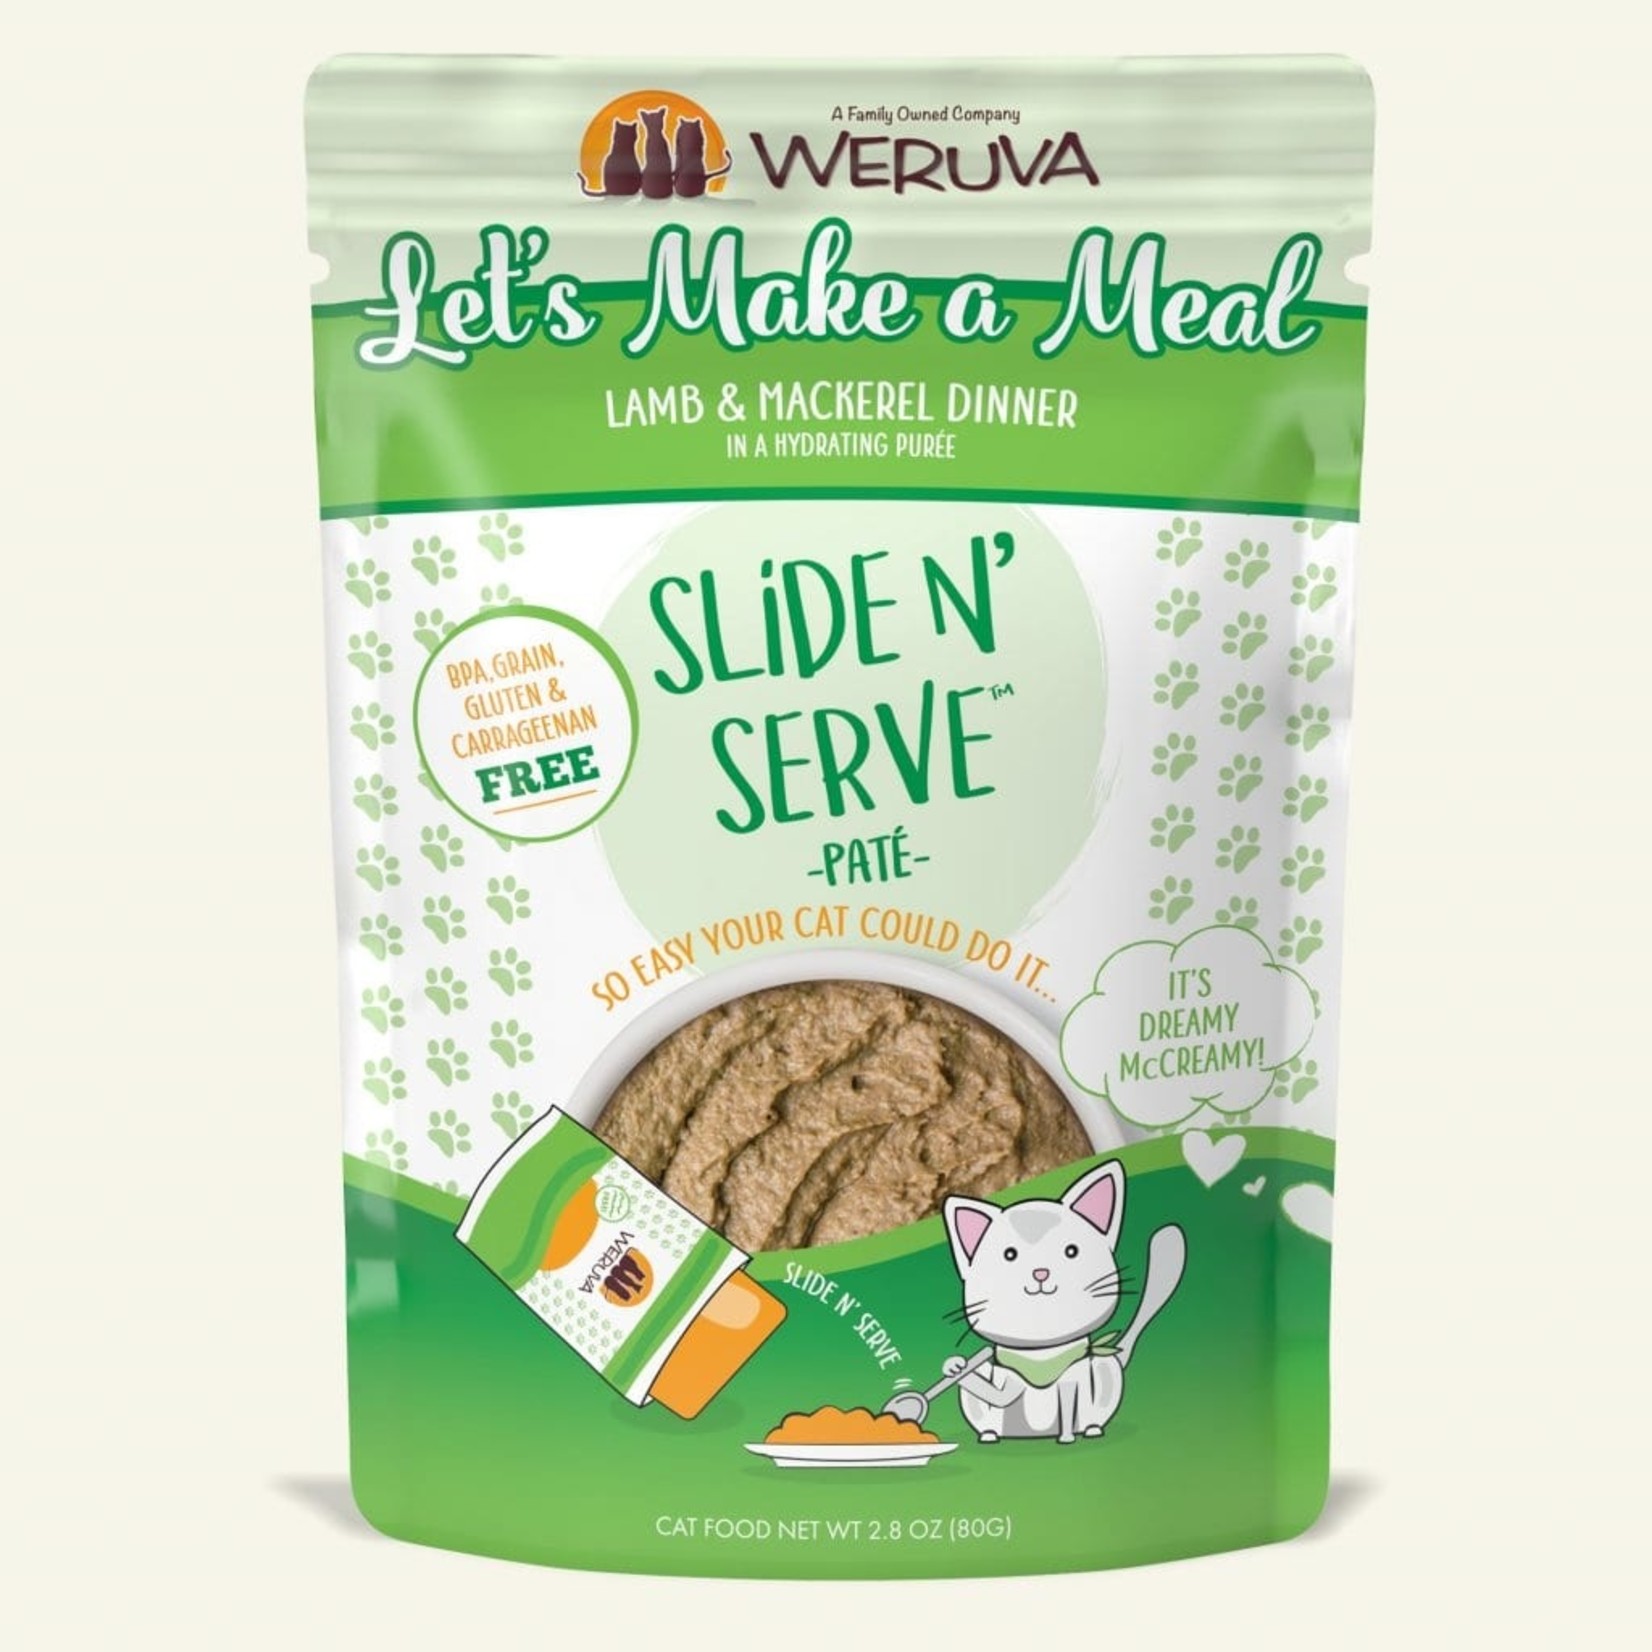 Weruva Weruva Wet Cat Food Slide & Serve Pate Let’s Make a Meal Lamb & Mackerel Dinner in a Hydrating Puree 2.8oz Pouch